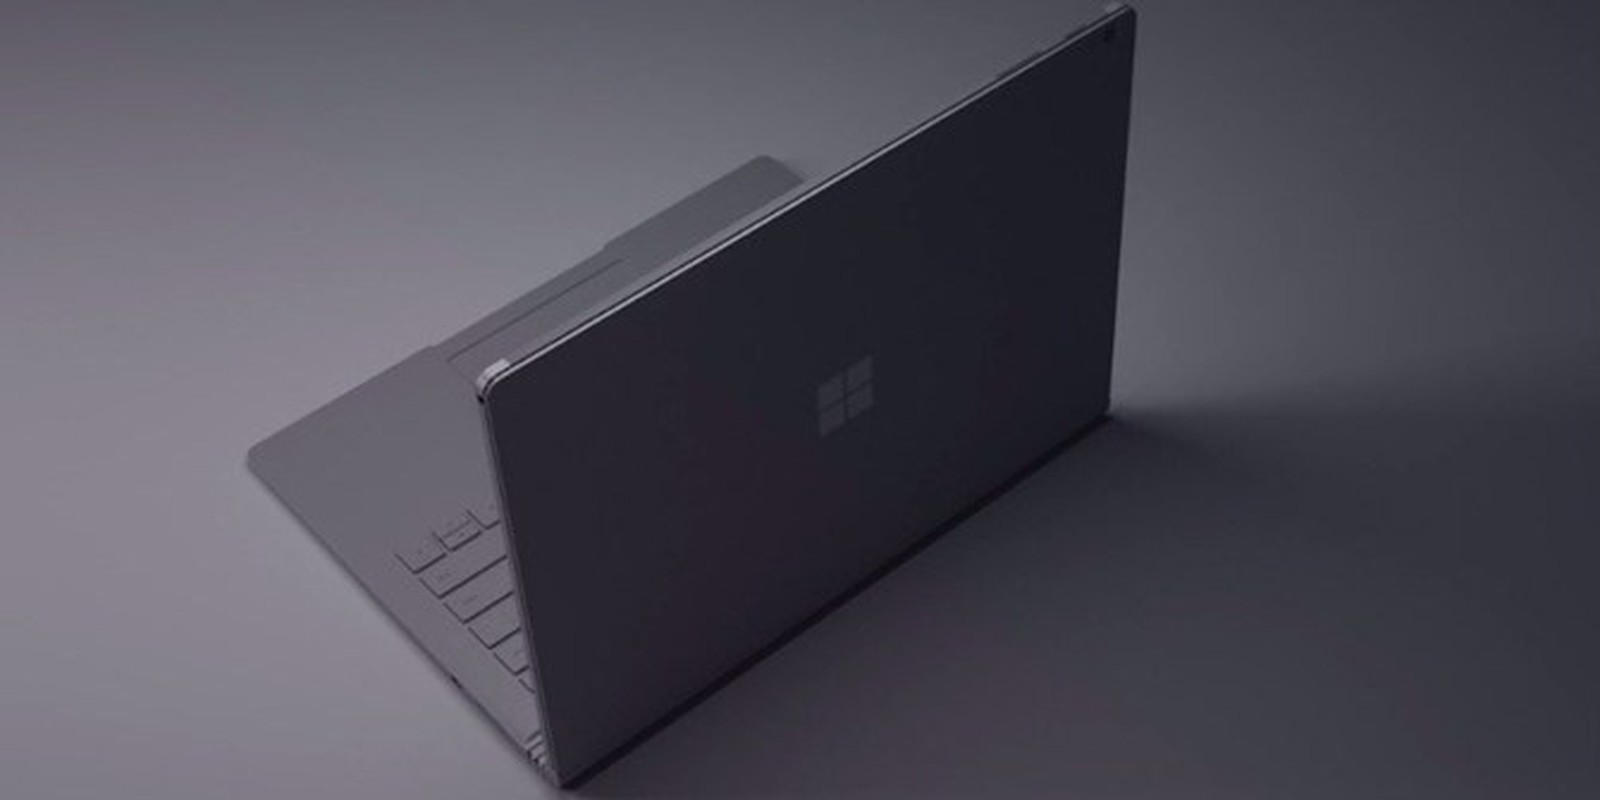 Soi can canh sieu pham may tinh Surface Book cua Microsoft-Hinh-2